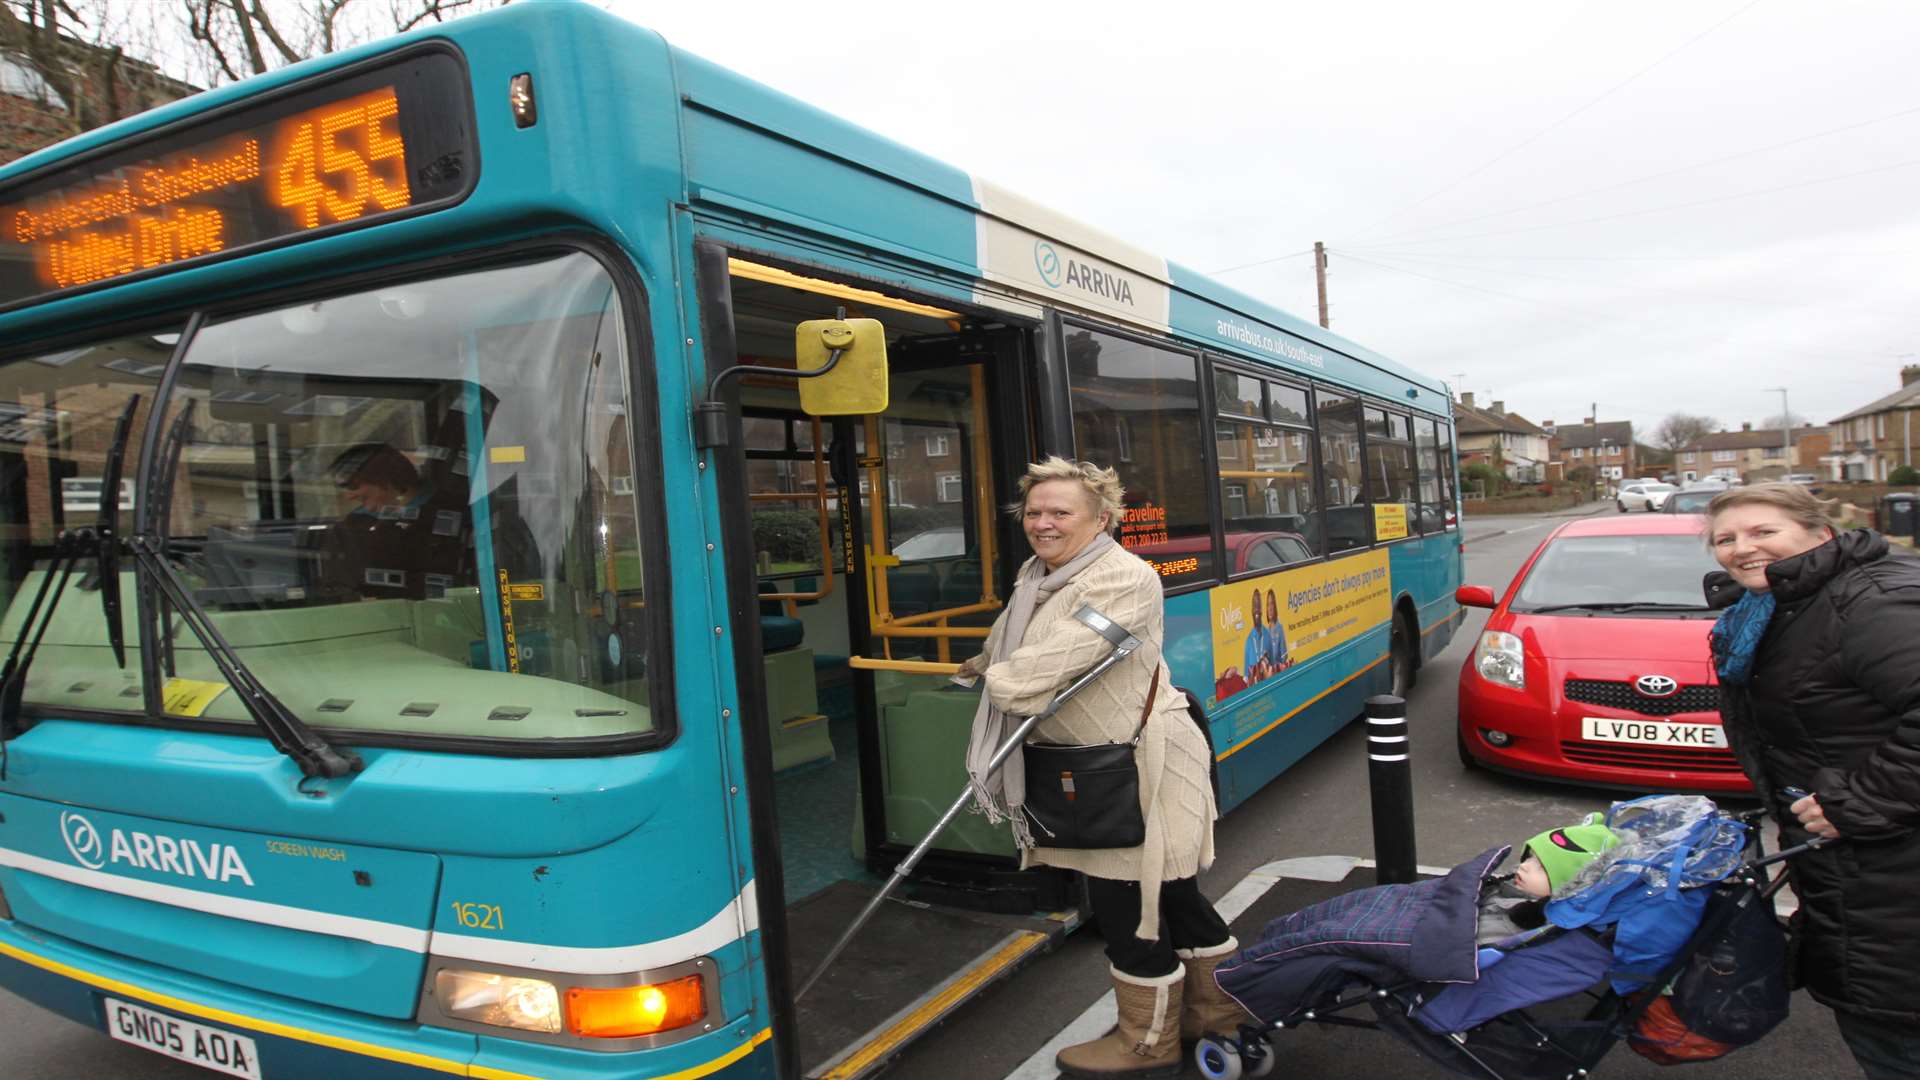 Sandra Stevens and Dee Matthews welcomed the return of the original 455 Arriva bus service through Swanscombe